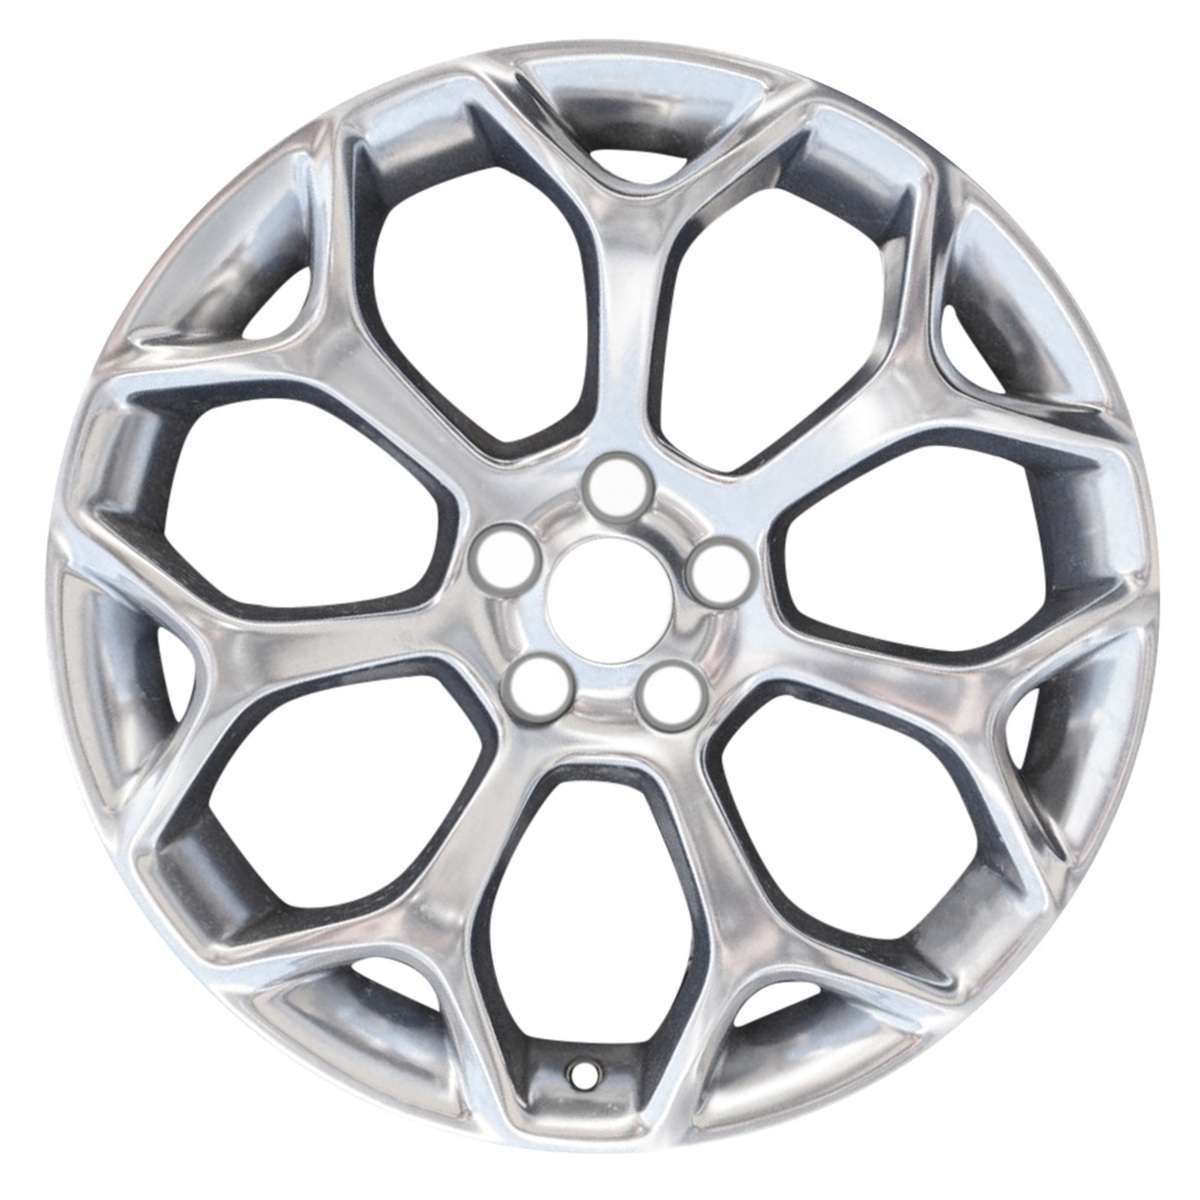 2015 Chrysler 300 19" OEM Wheel Rim W2537P